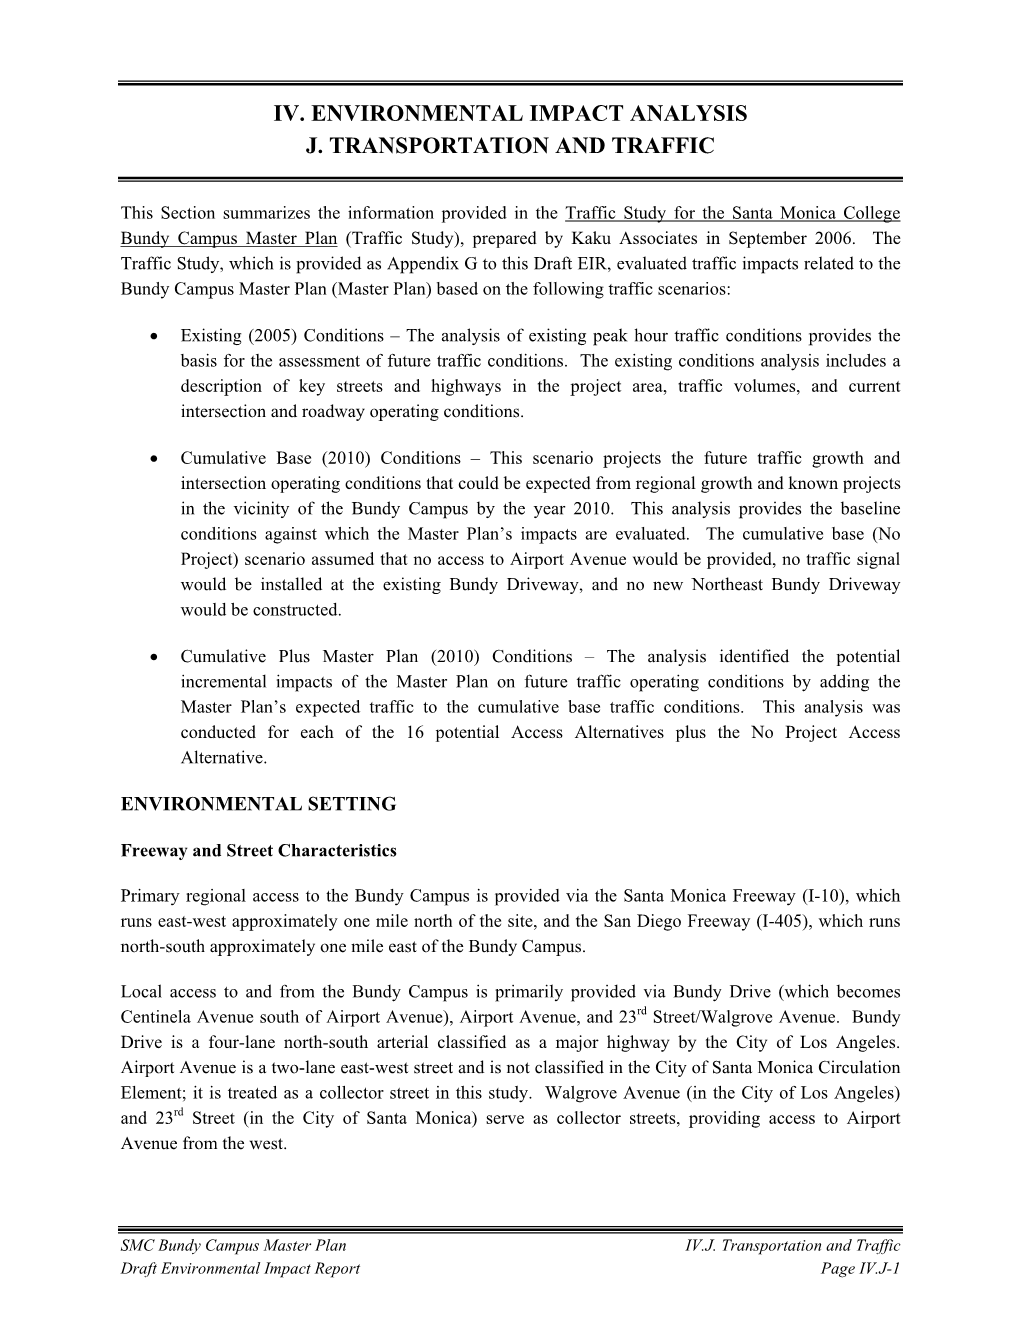 IV.J. Transportation and Traffic Draft Environmental Impact Report Page IV.J-1